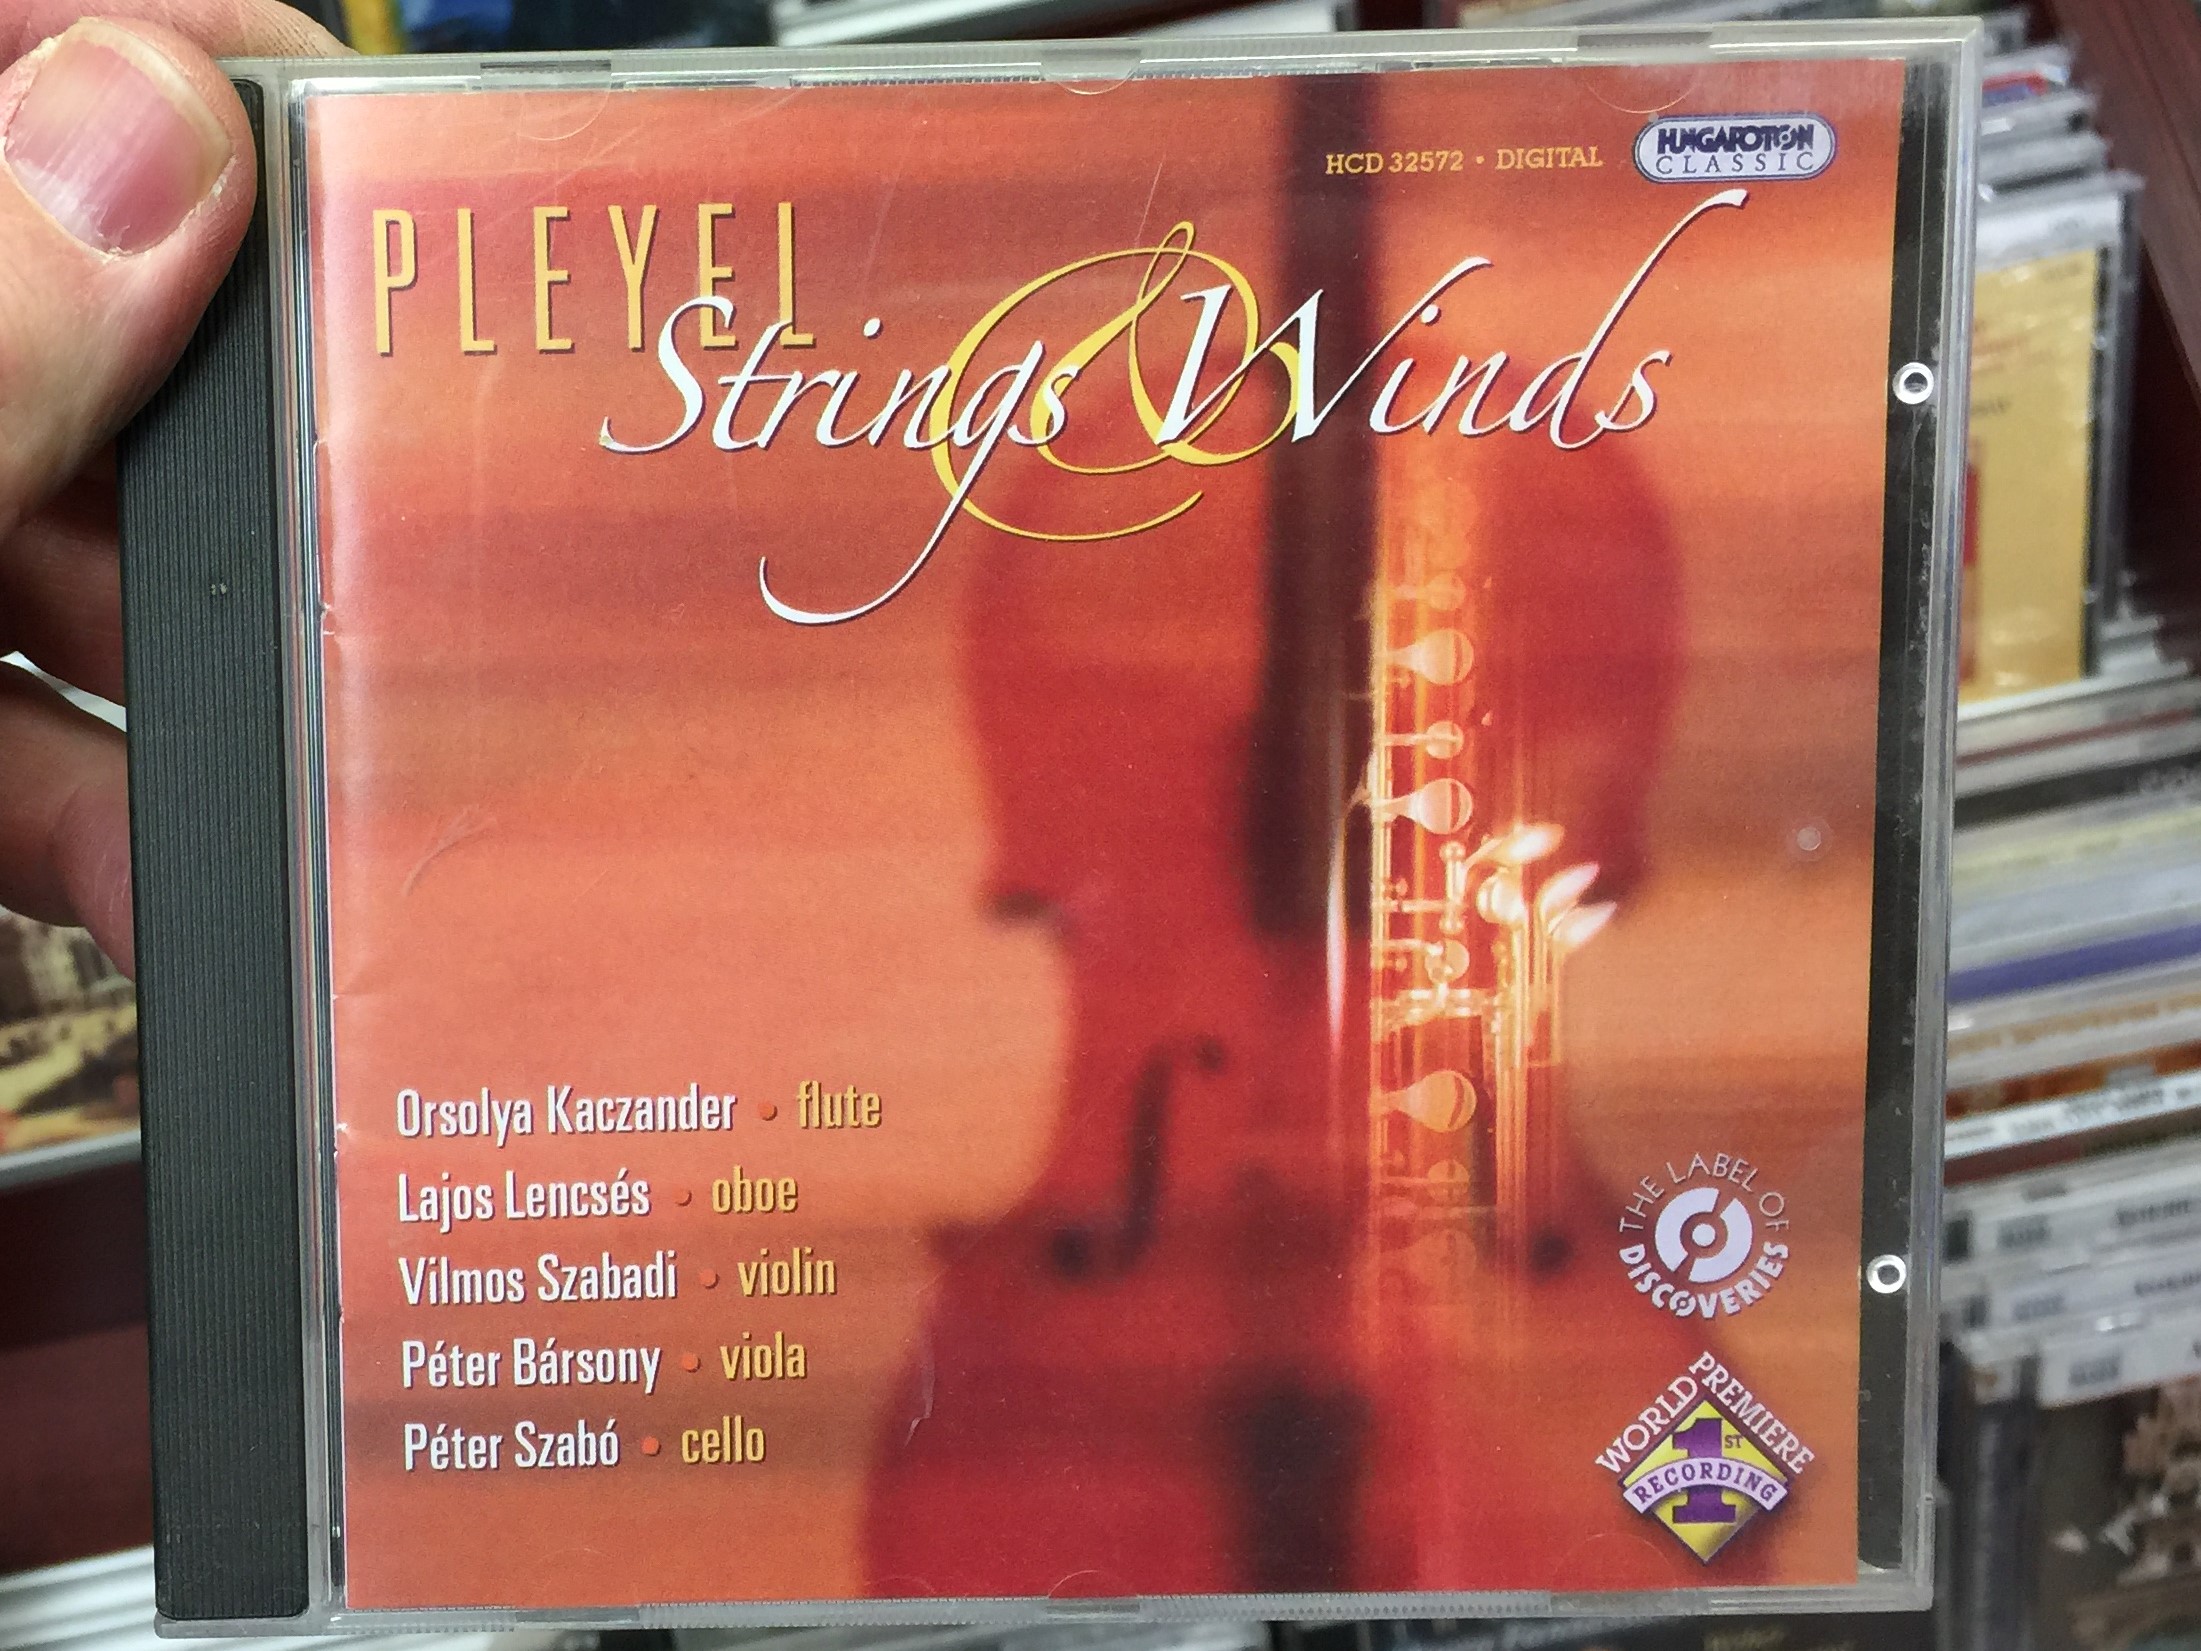 pleyel-strings-winds-orsolya-kaczander-flute-lajos-lencs-s-oboe-vilmos-szabadi-violin-p-ter-b-rsony-viola-p-ter-szab-cello-hungaroton-classic-audio-cd-2008-stereo-hcd-32572-1-.jpg